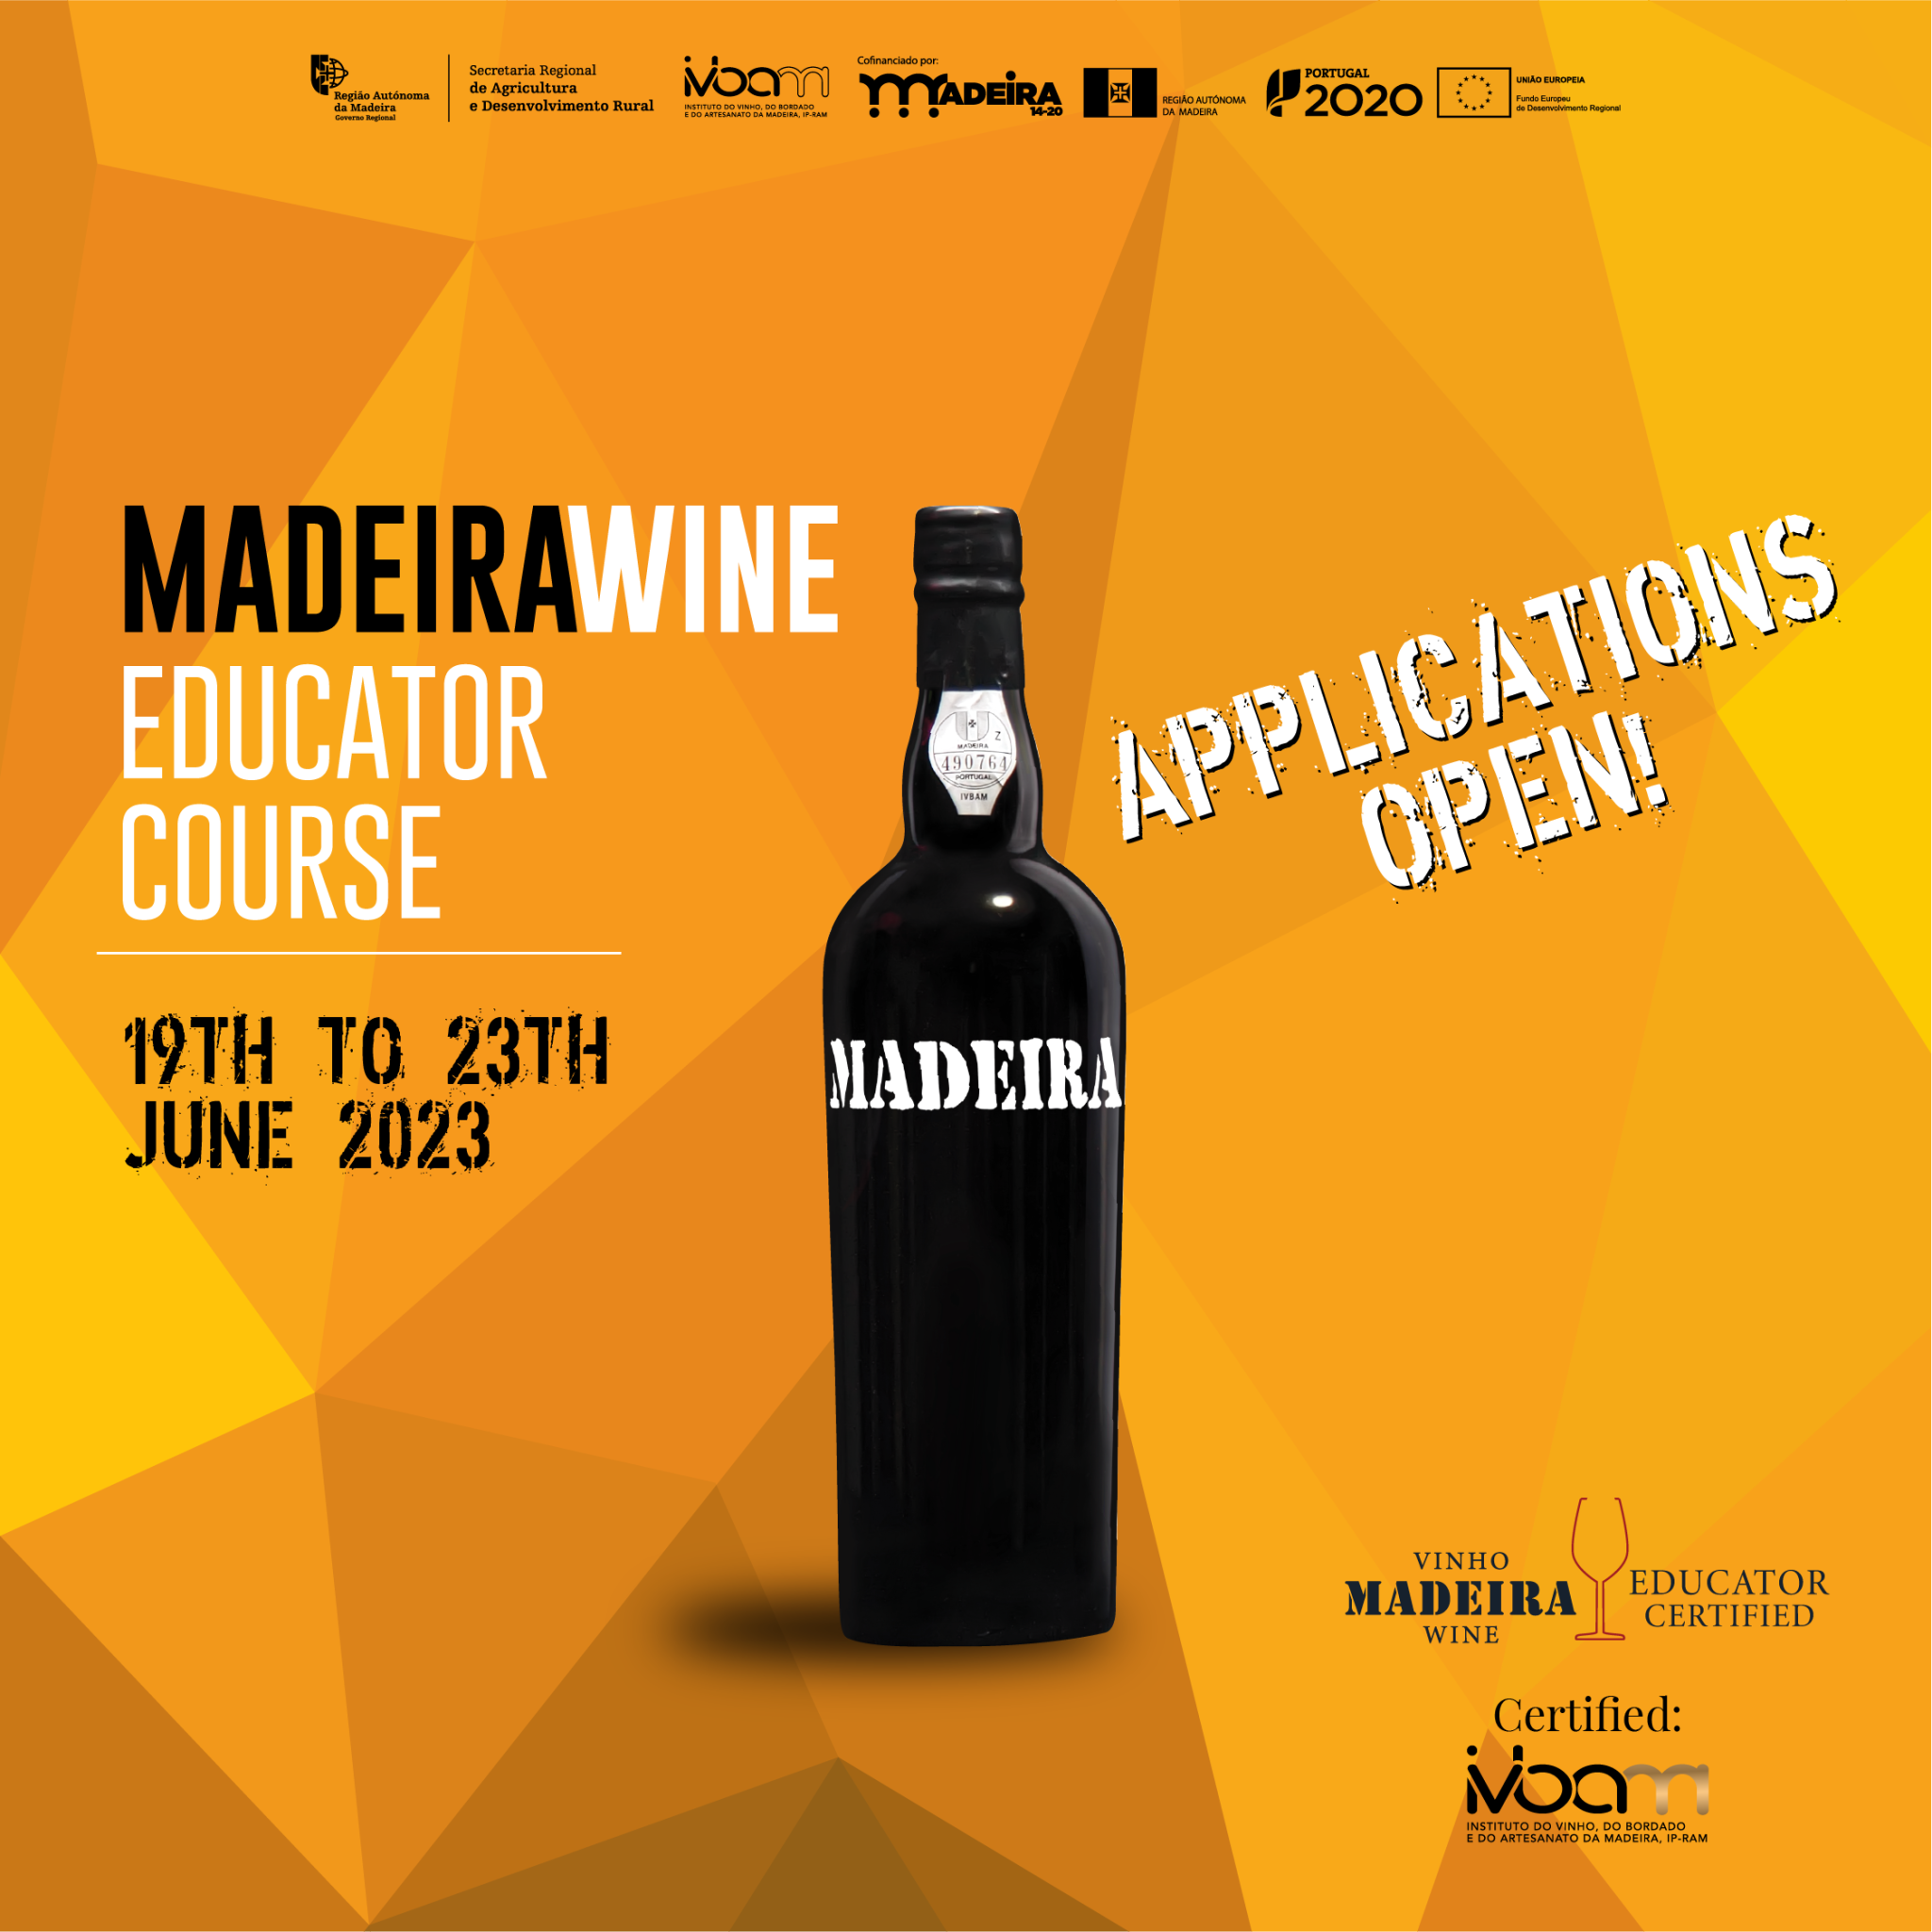 Madeira Wine Educator Course - English Edition